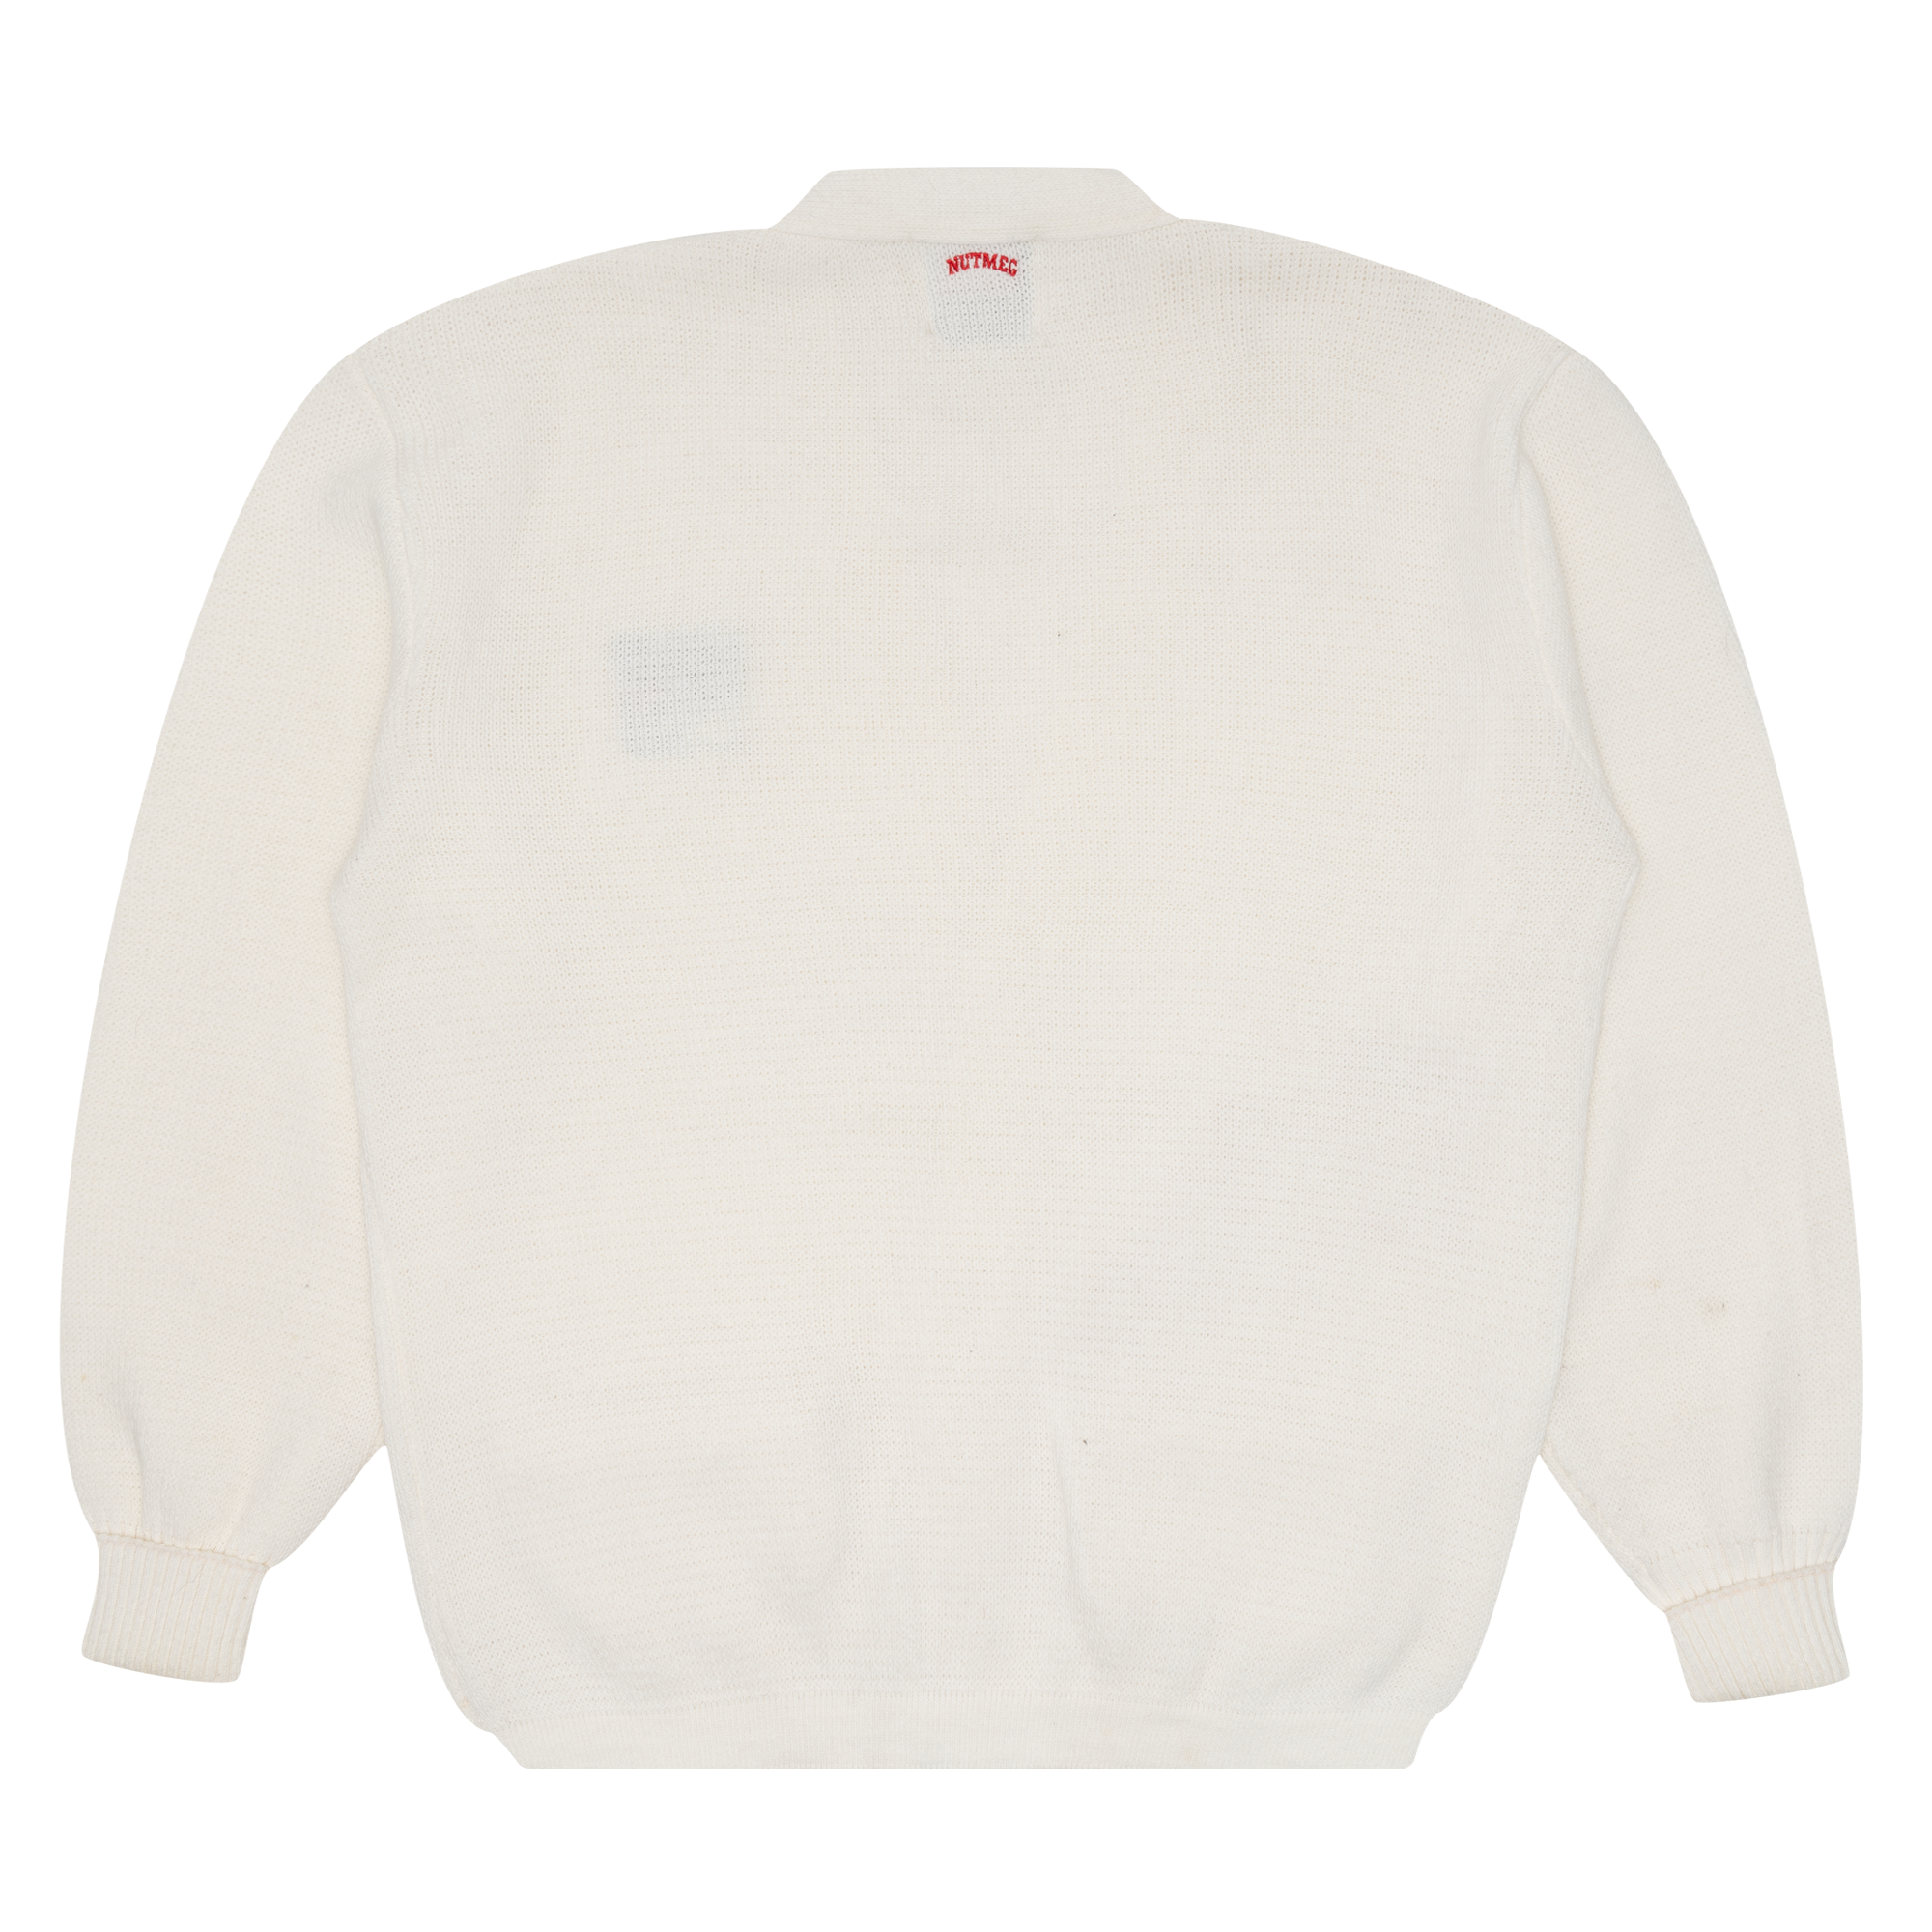 New York Rangers 1990s 6-Button Cardigan Sweater White-PLUS